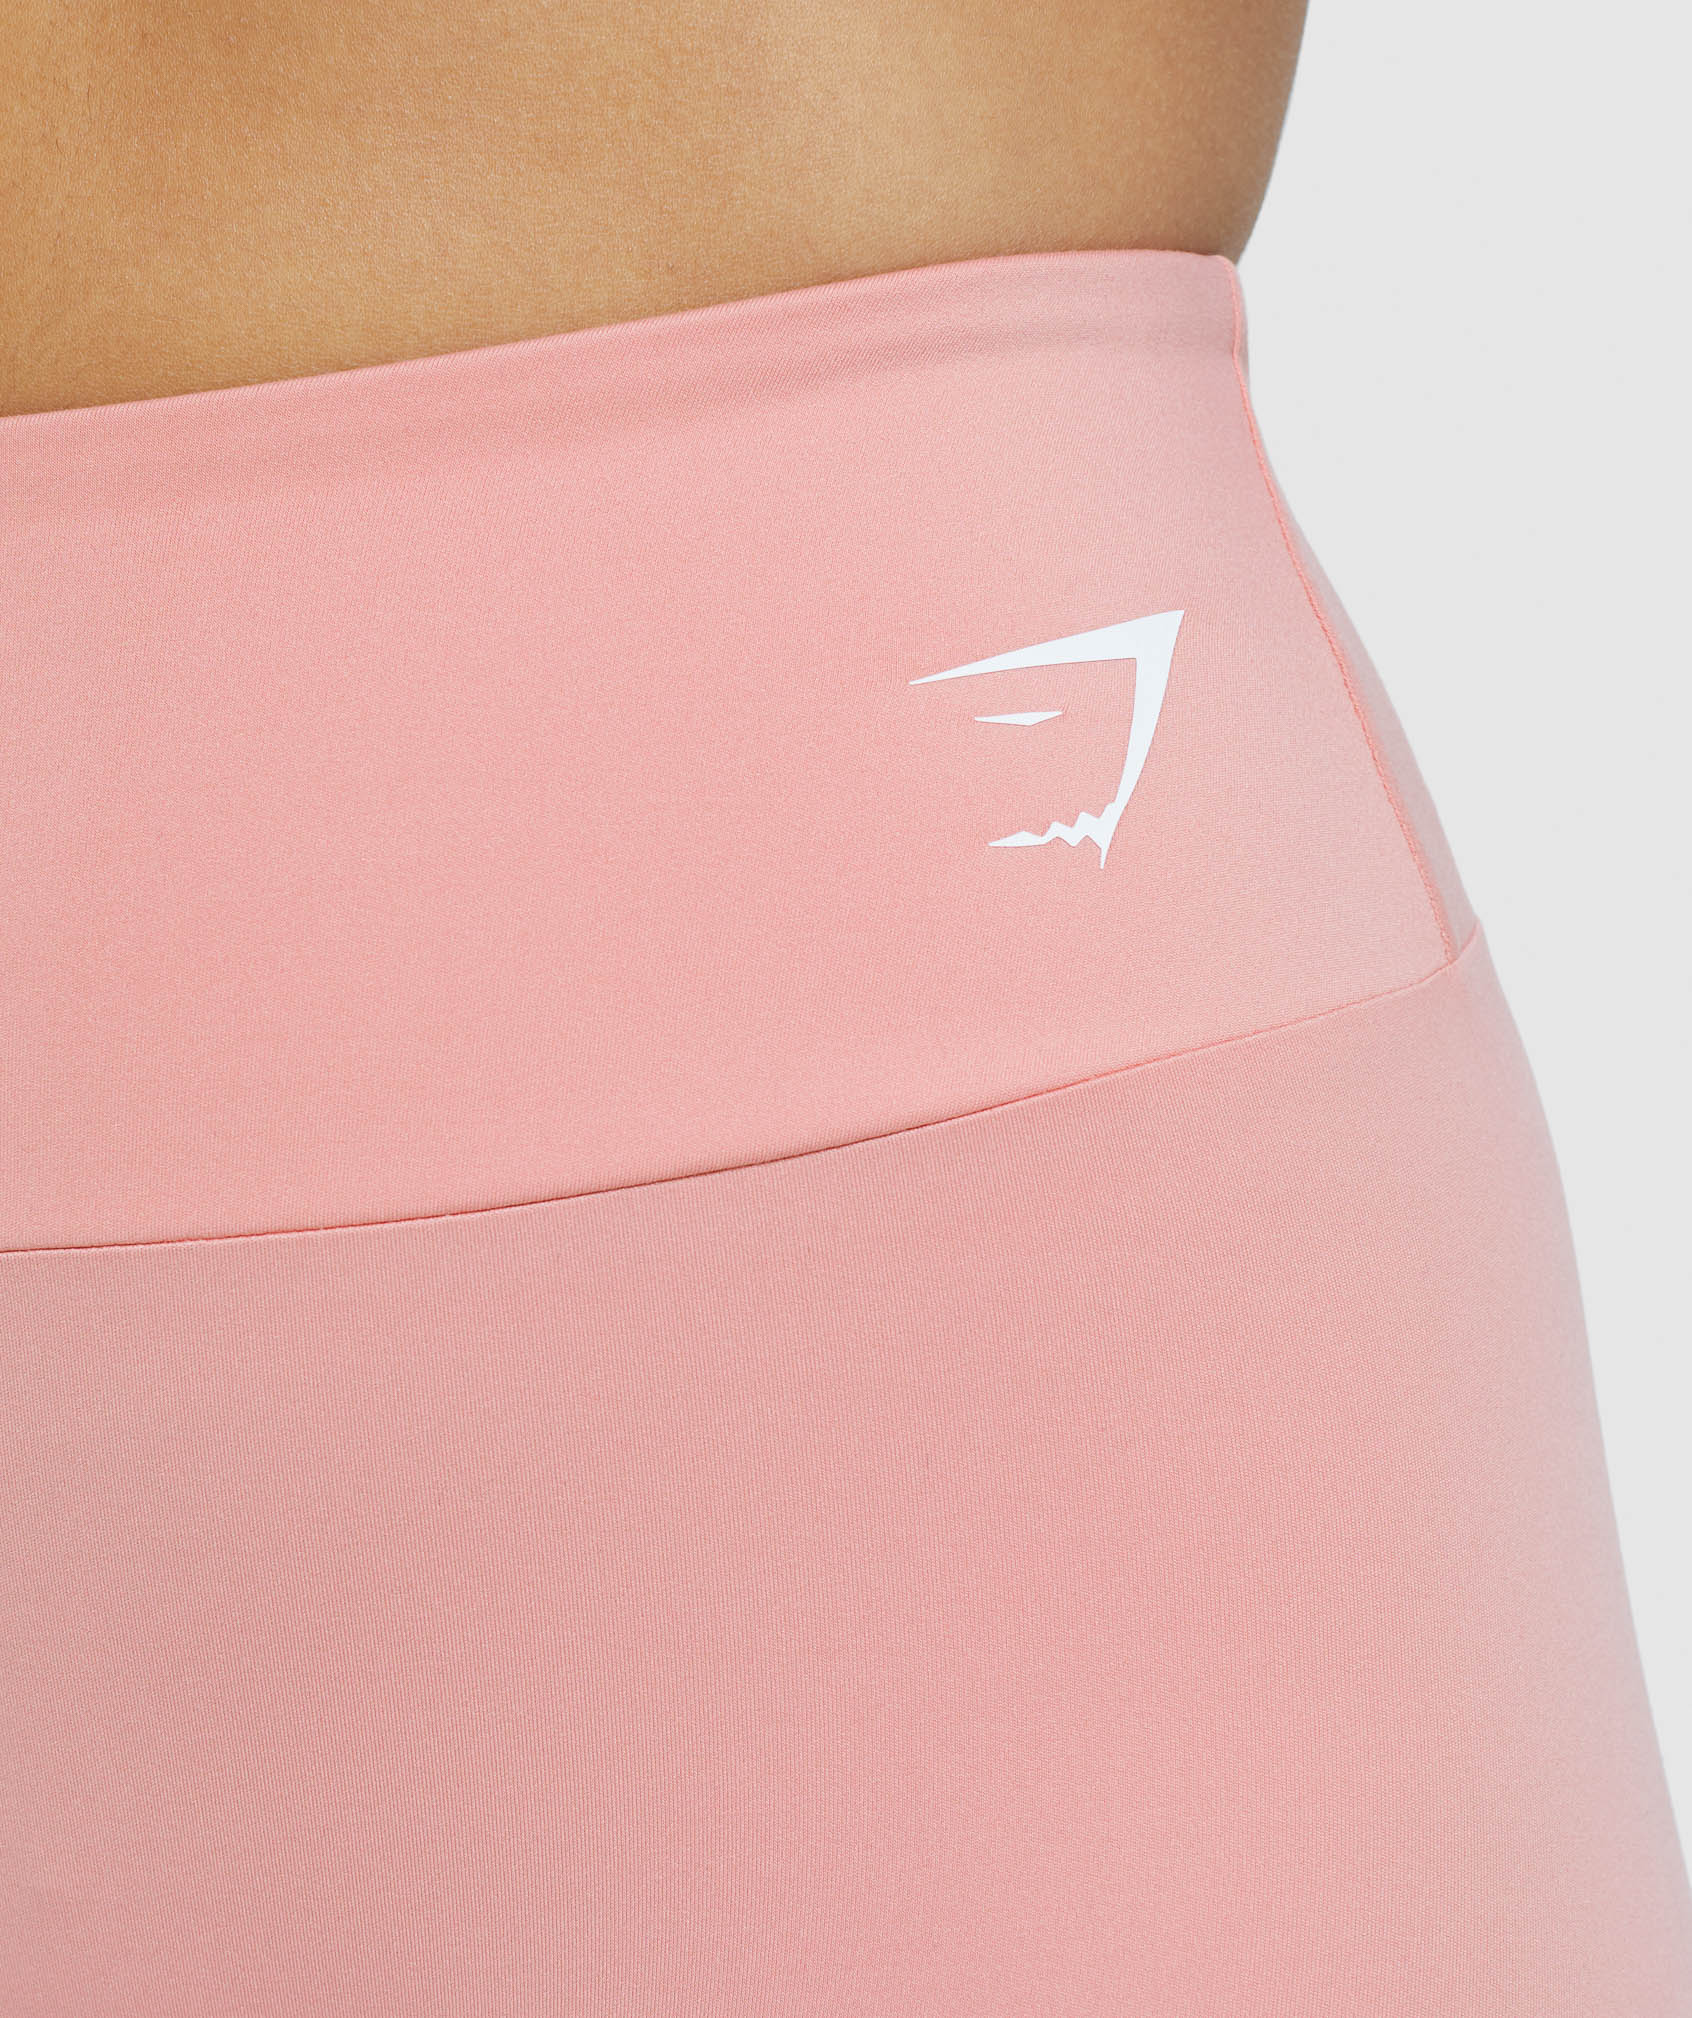 Women's training leggings Gymshark Flawless Shine Seamless pink/white 